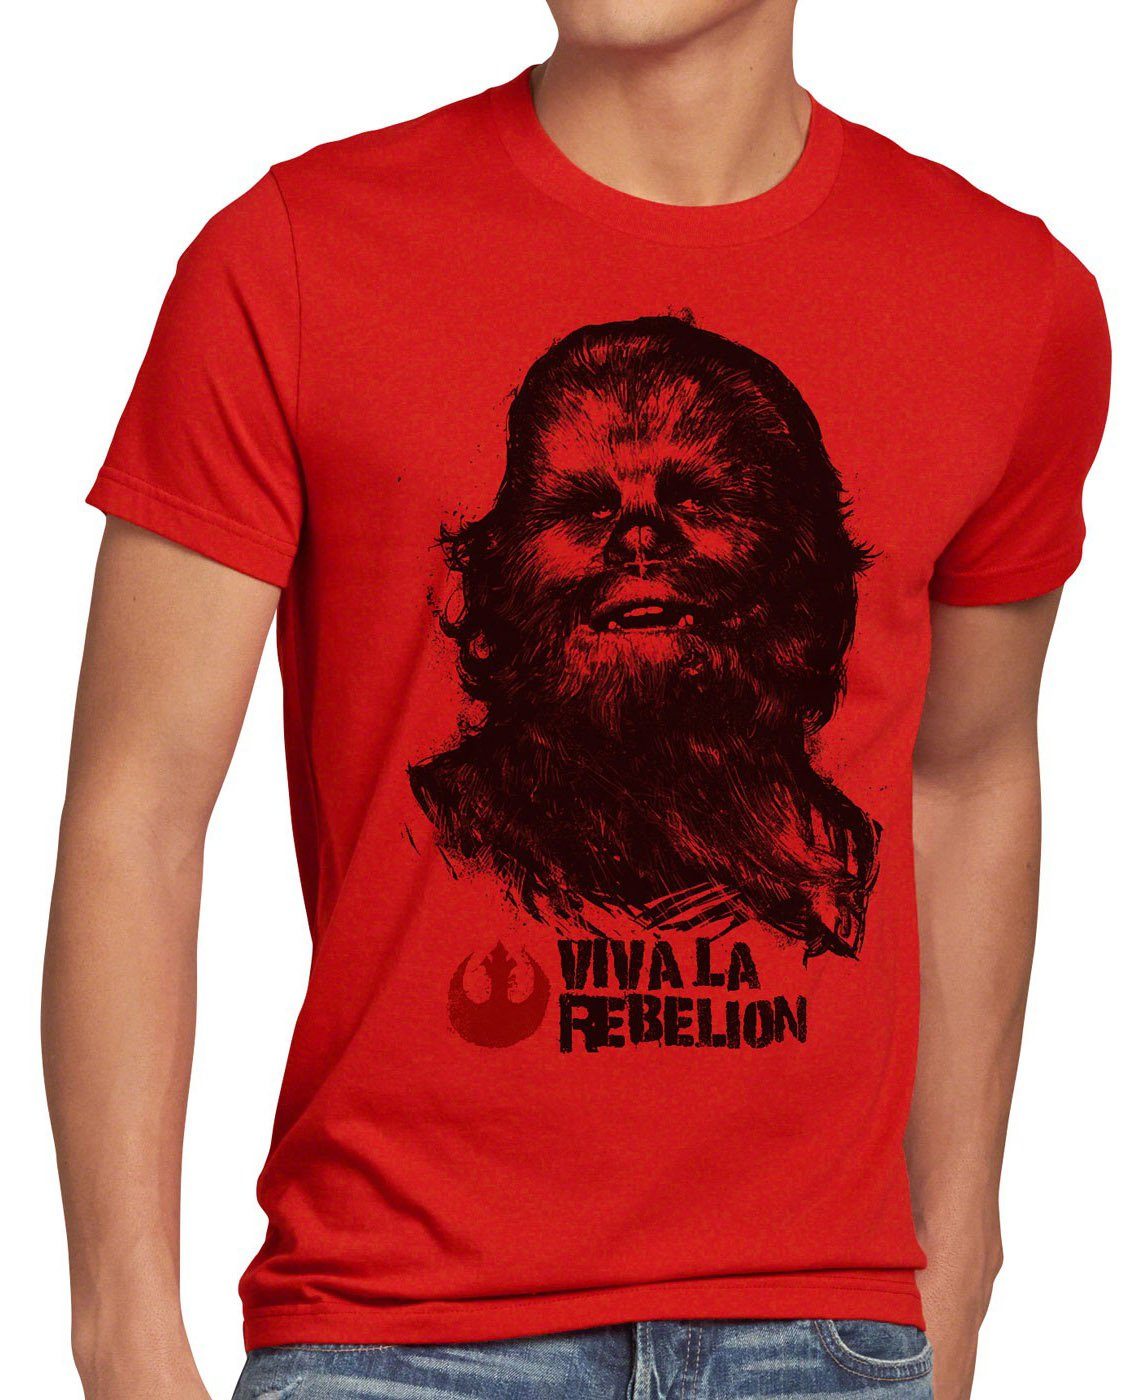 guervara Herren luke vader star Print-Shirt T-Shirt rot darth jedi LA style3 chewbacca che wars VIVA REBELION